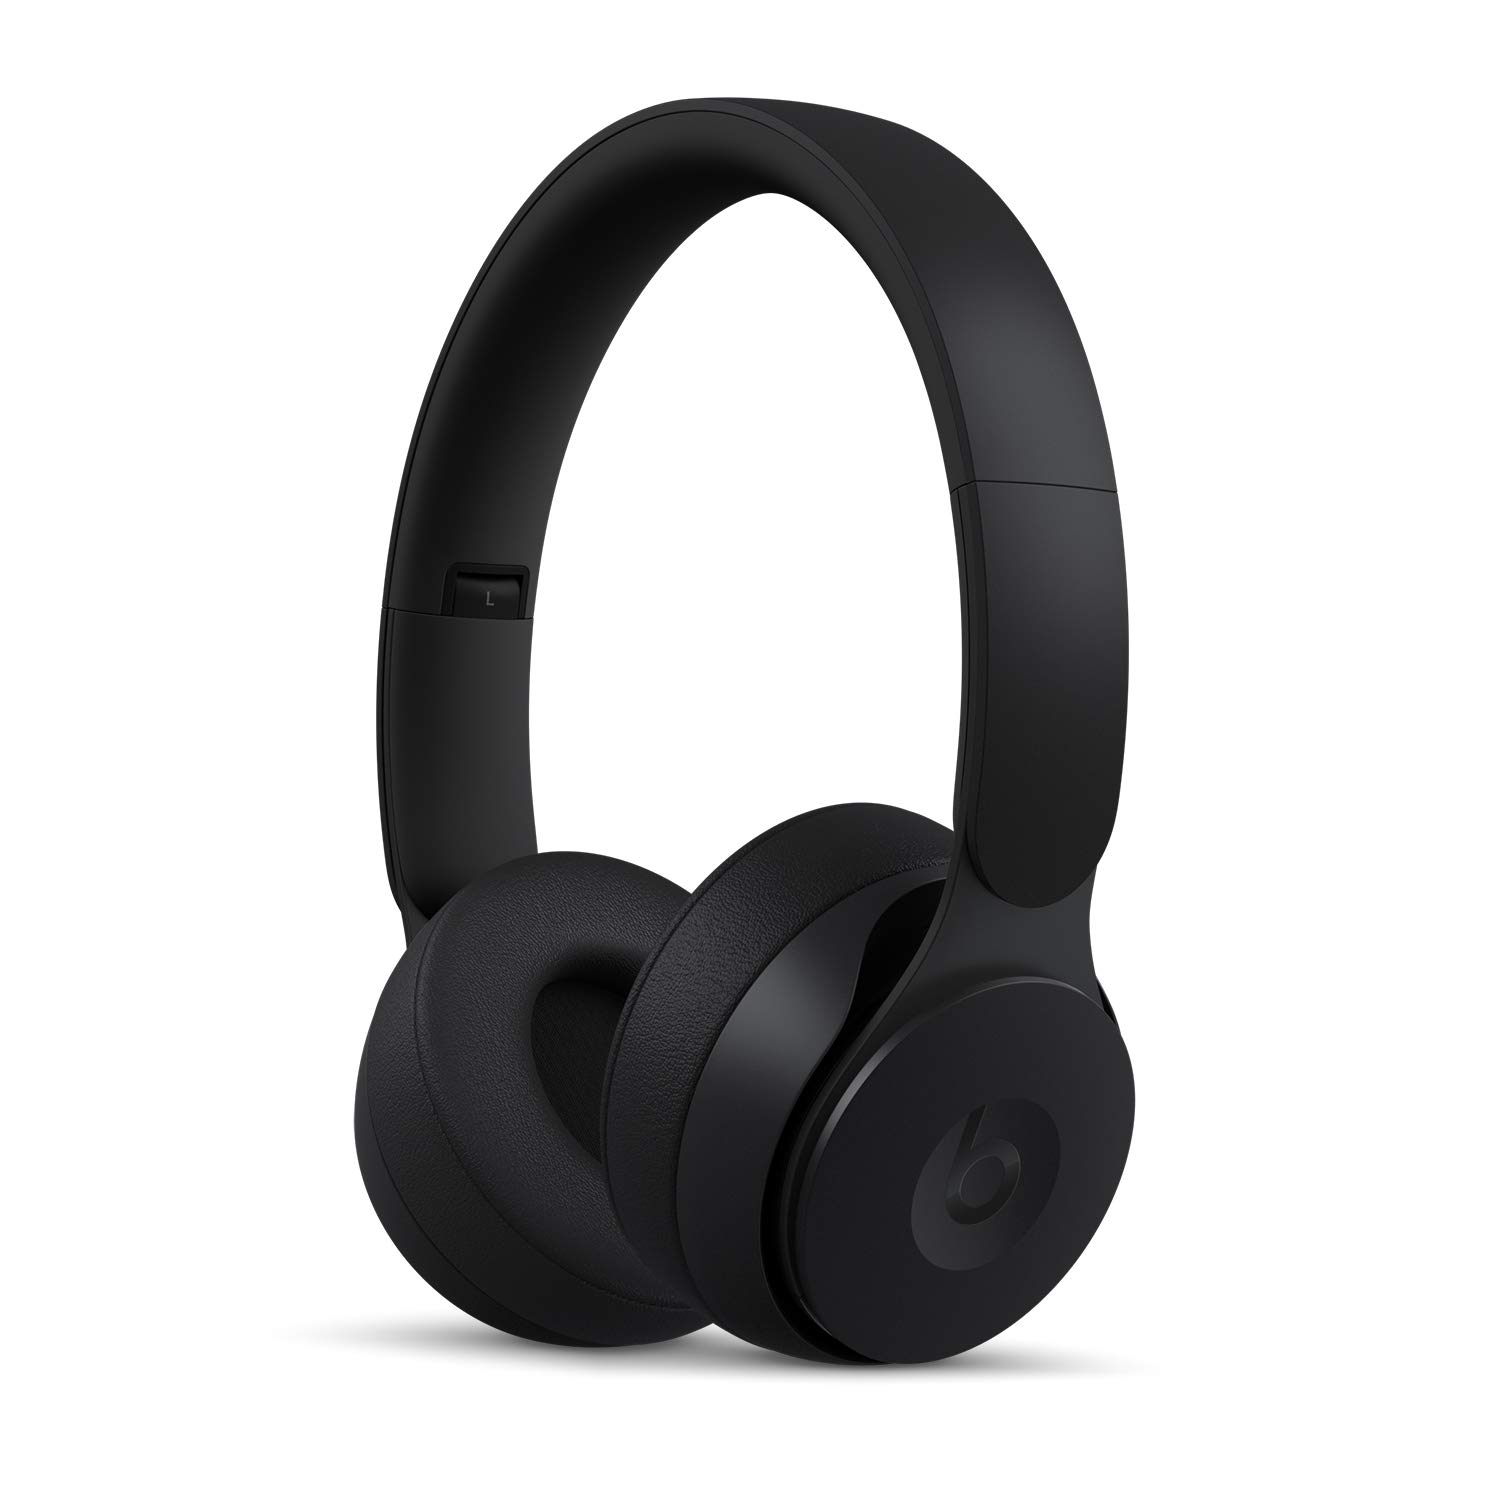 Beats Solo Pro 无线降噪贴耳式耳机 - Apple H1 耳机芯片，1 类蓝牙，22 小时聆听时间，内置麦克风 - 黑色